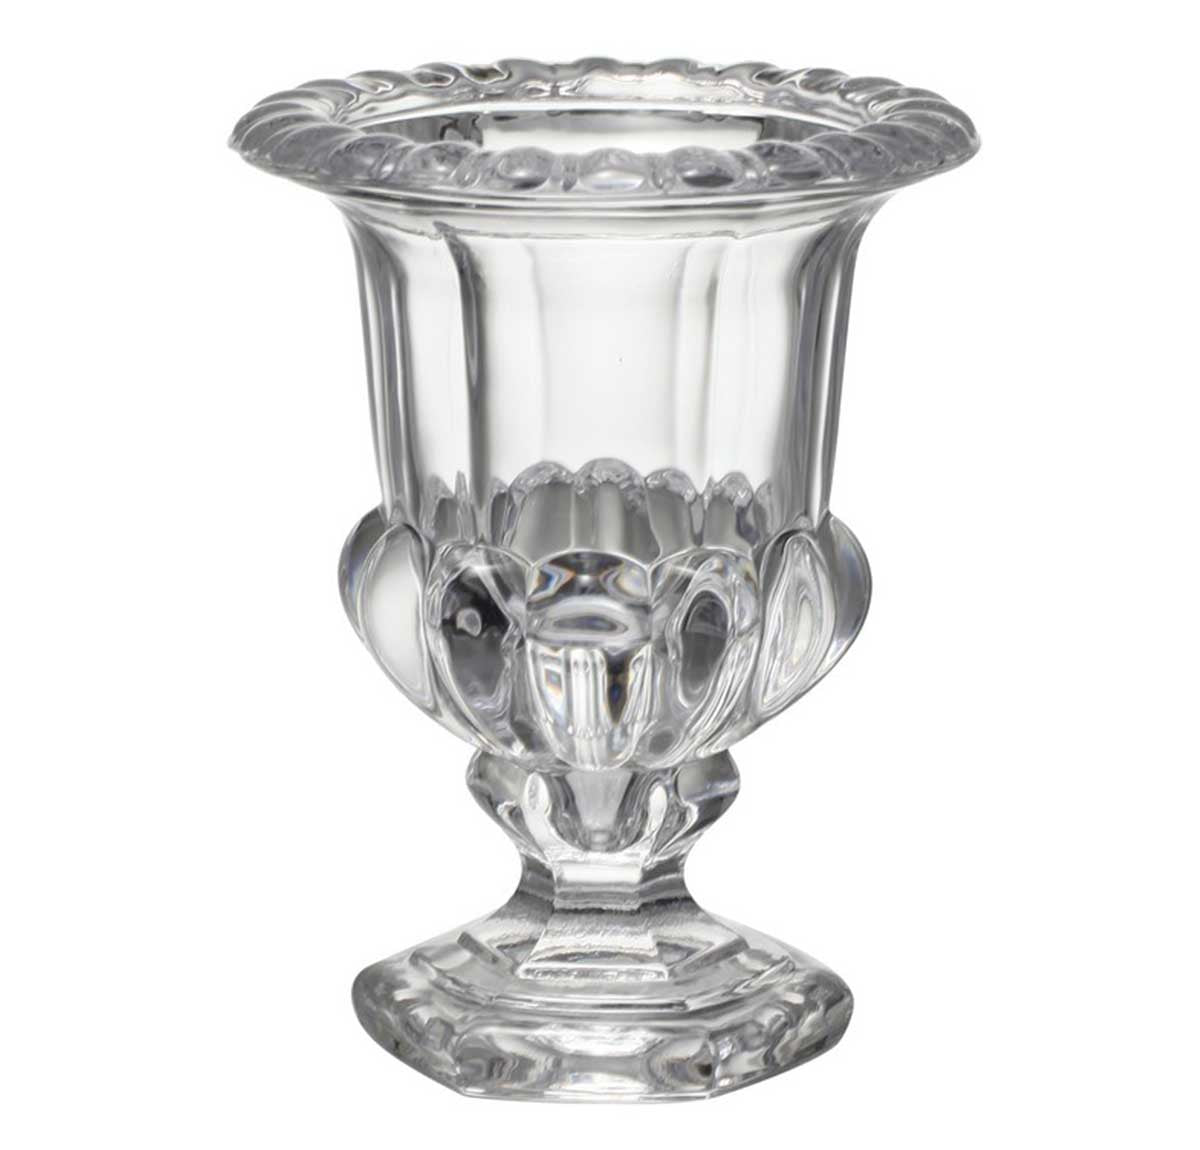 Omari Crystal Urn Vase - medium | Vases & Urns | Home Decor